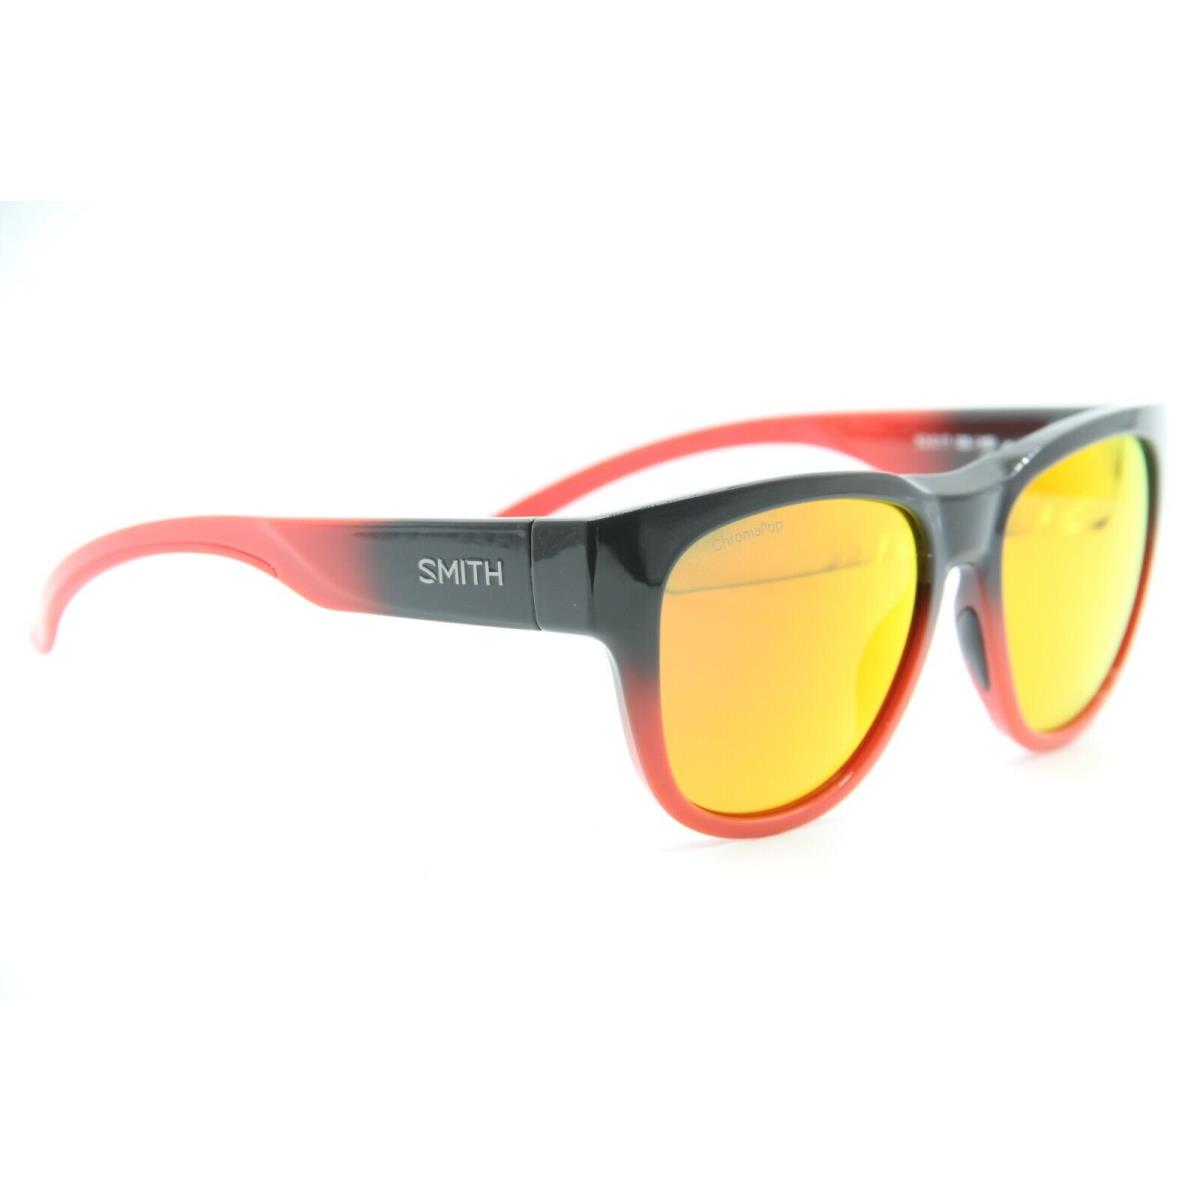 Smith Optics Rounder Smoke Rise Hws X6 Fade Sunglasses Case 52-17 - Frame: Gray, Lens: Green